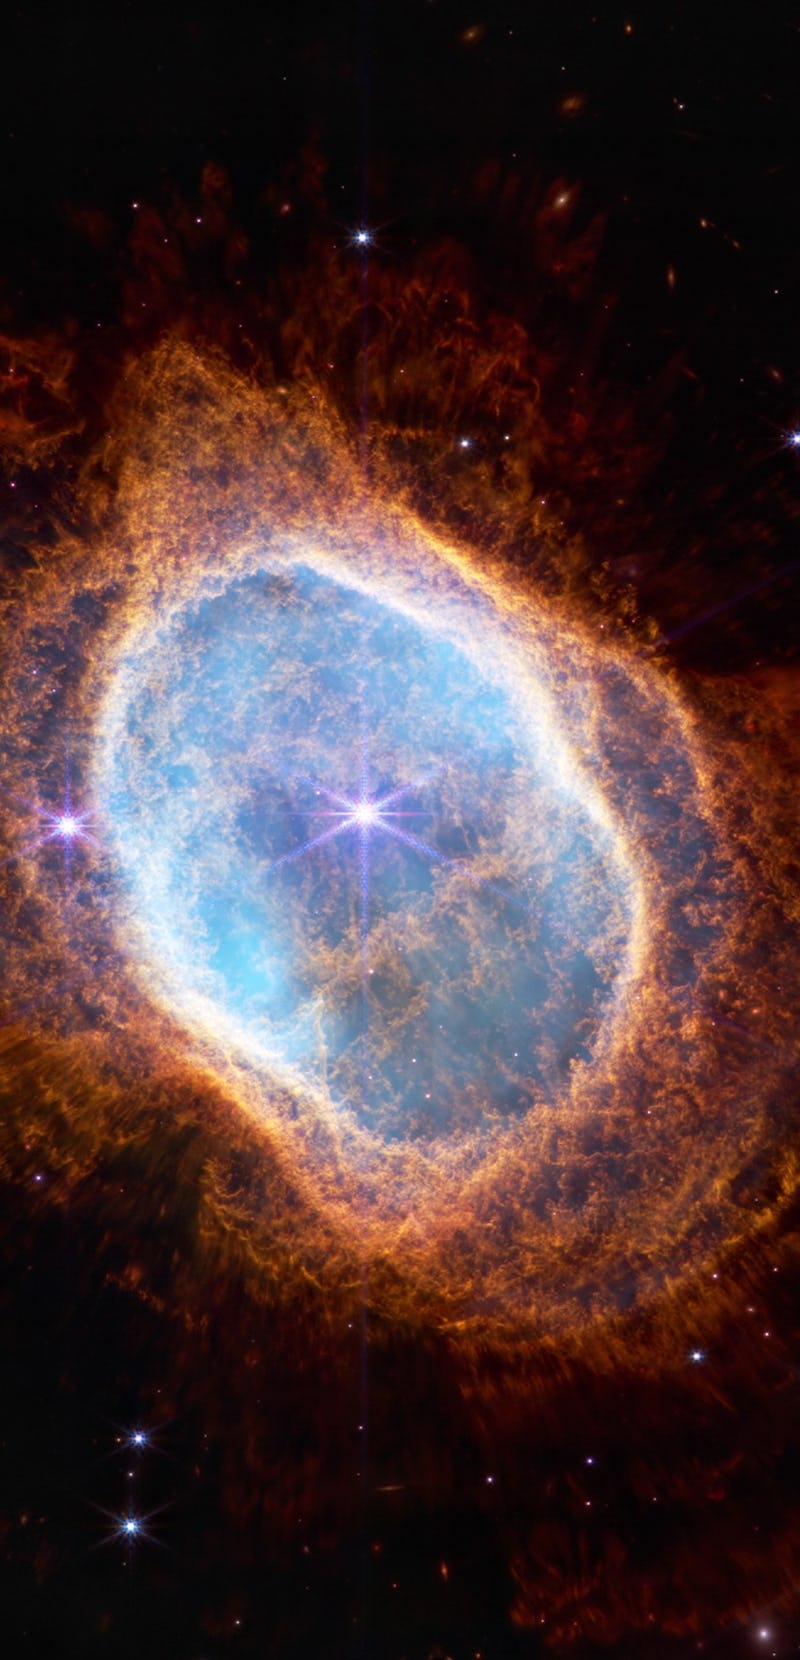 James Webb Space Telescope image of South Ring planetary nebula